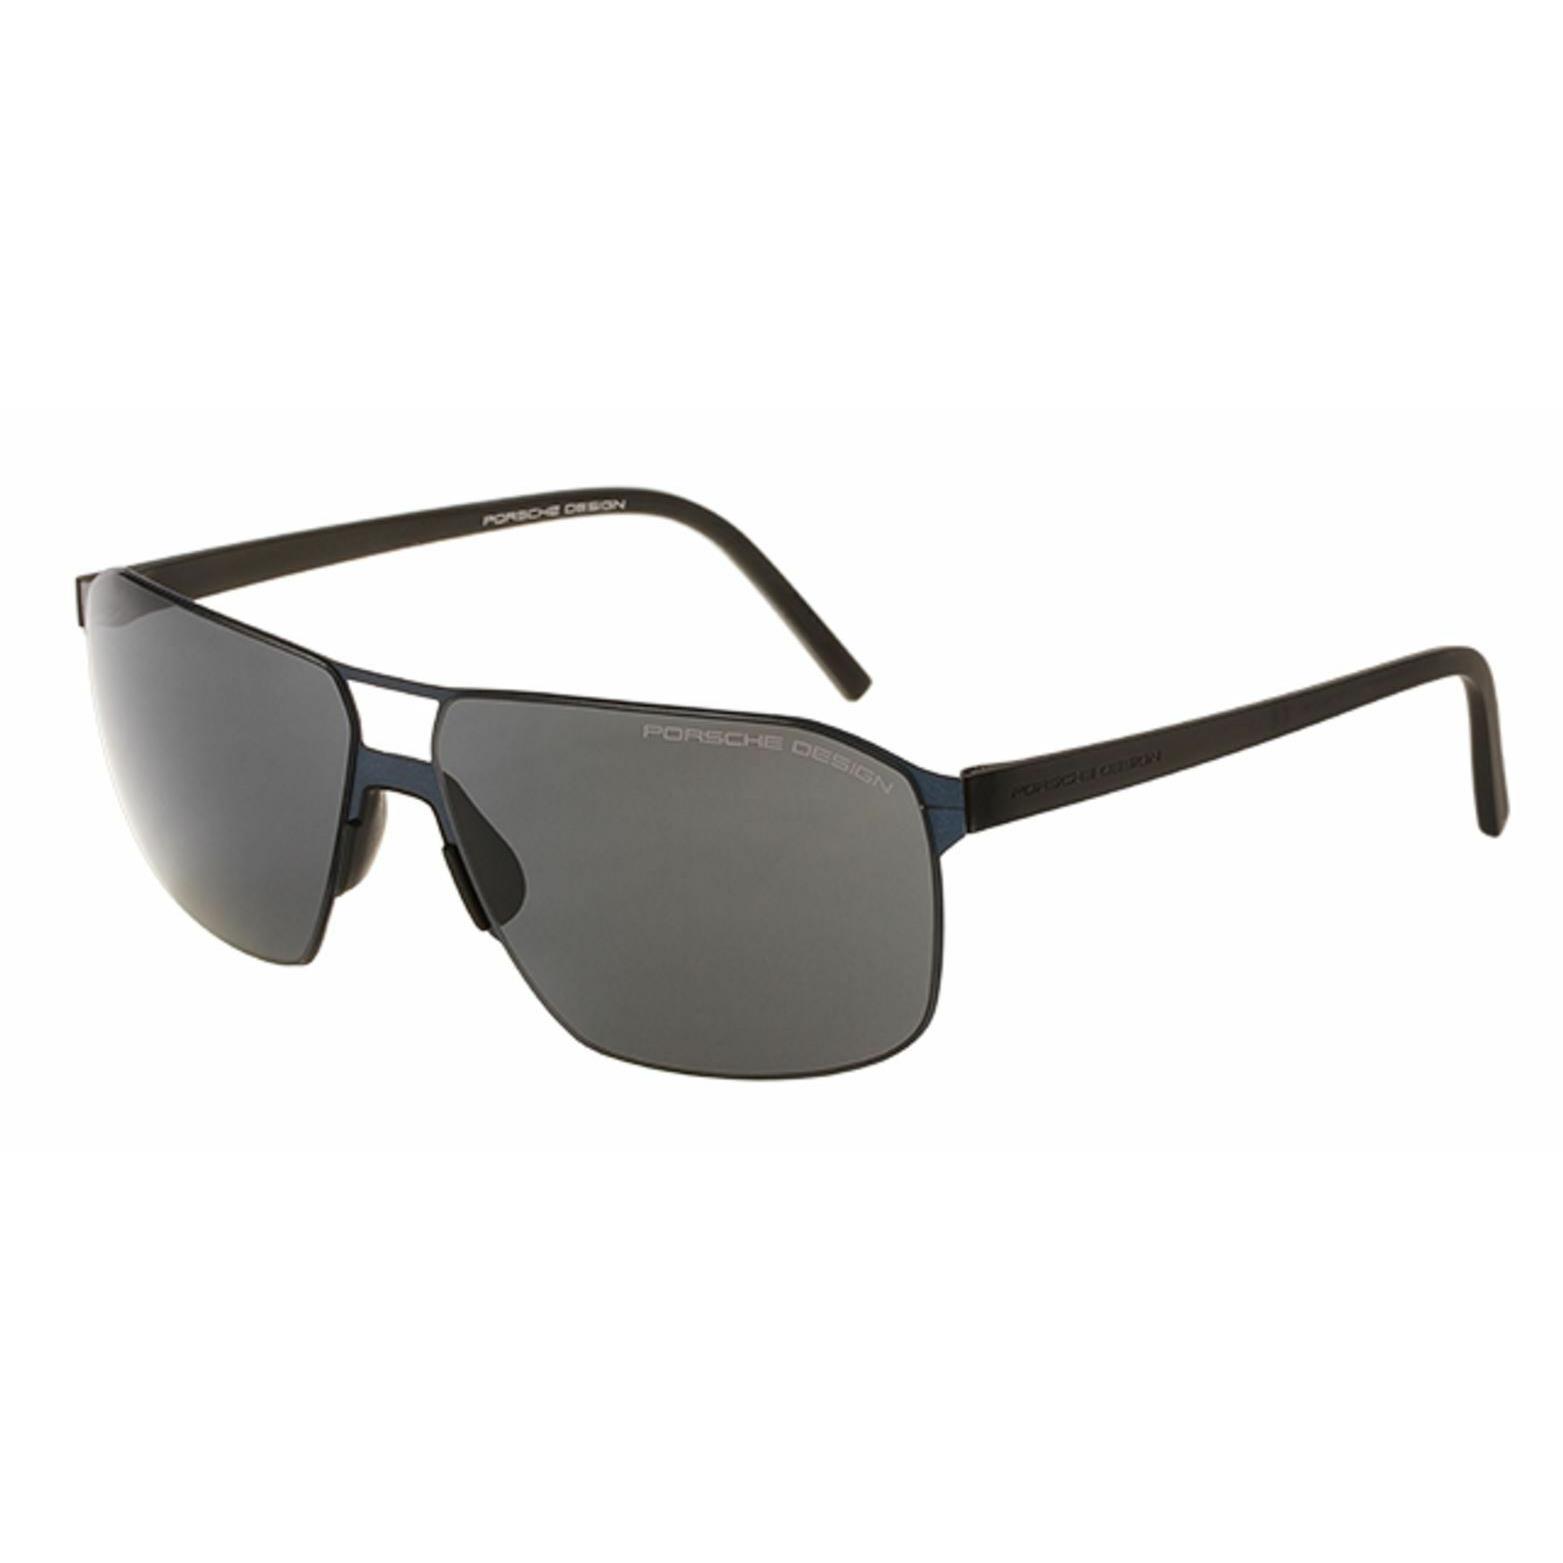 Porsche Design P 8645 C Blue Sunglasses